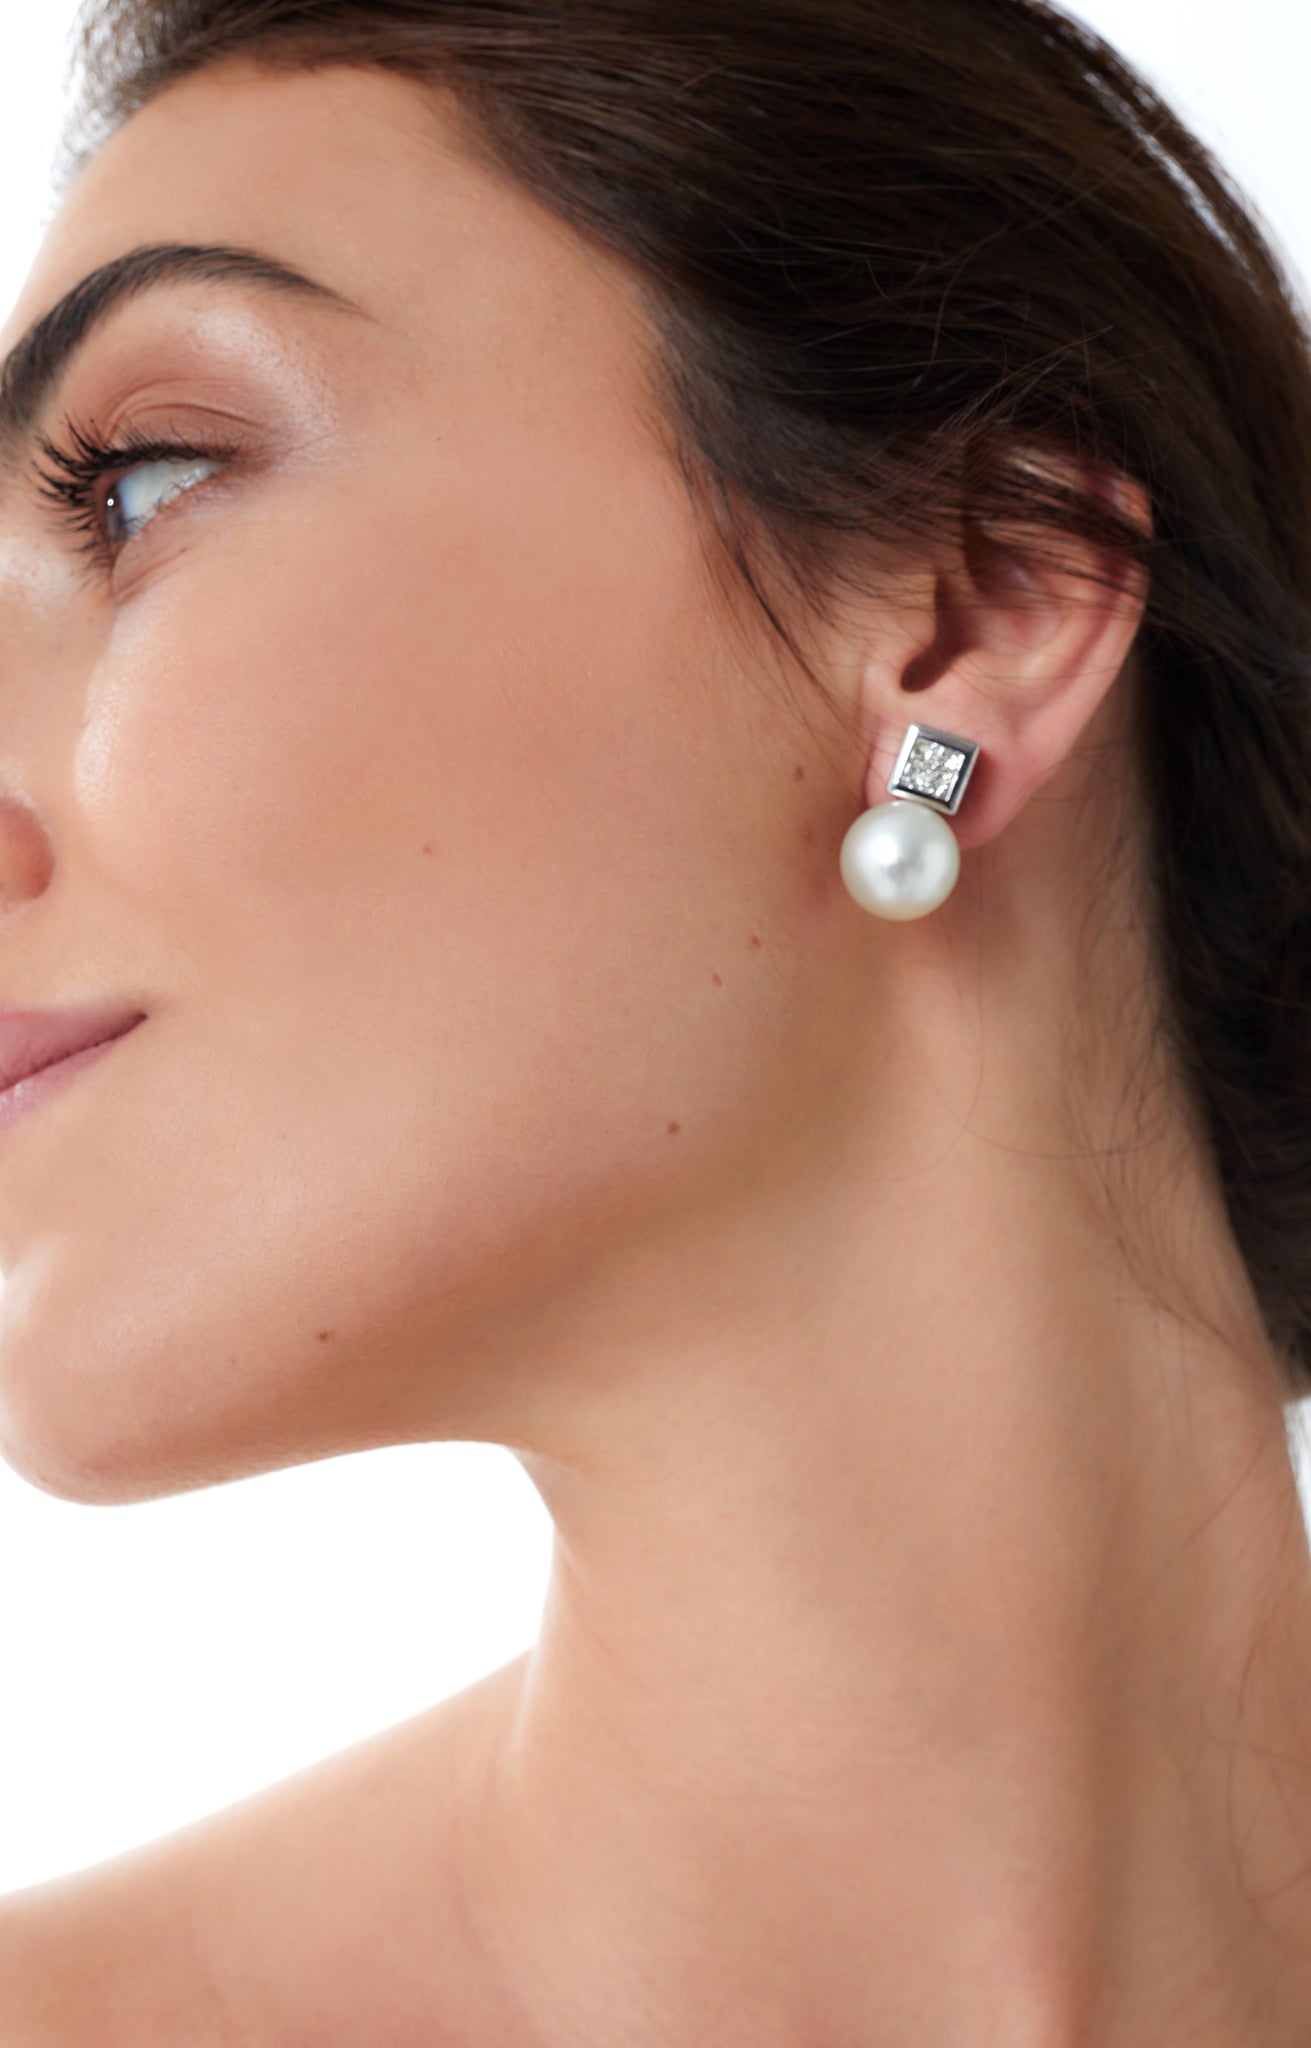 Sea Born earrings